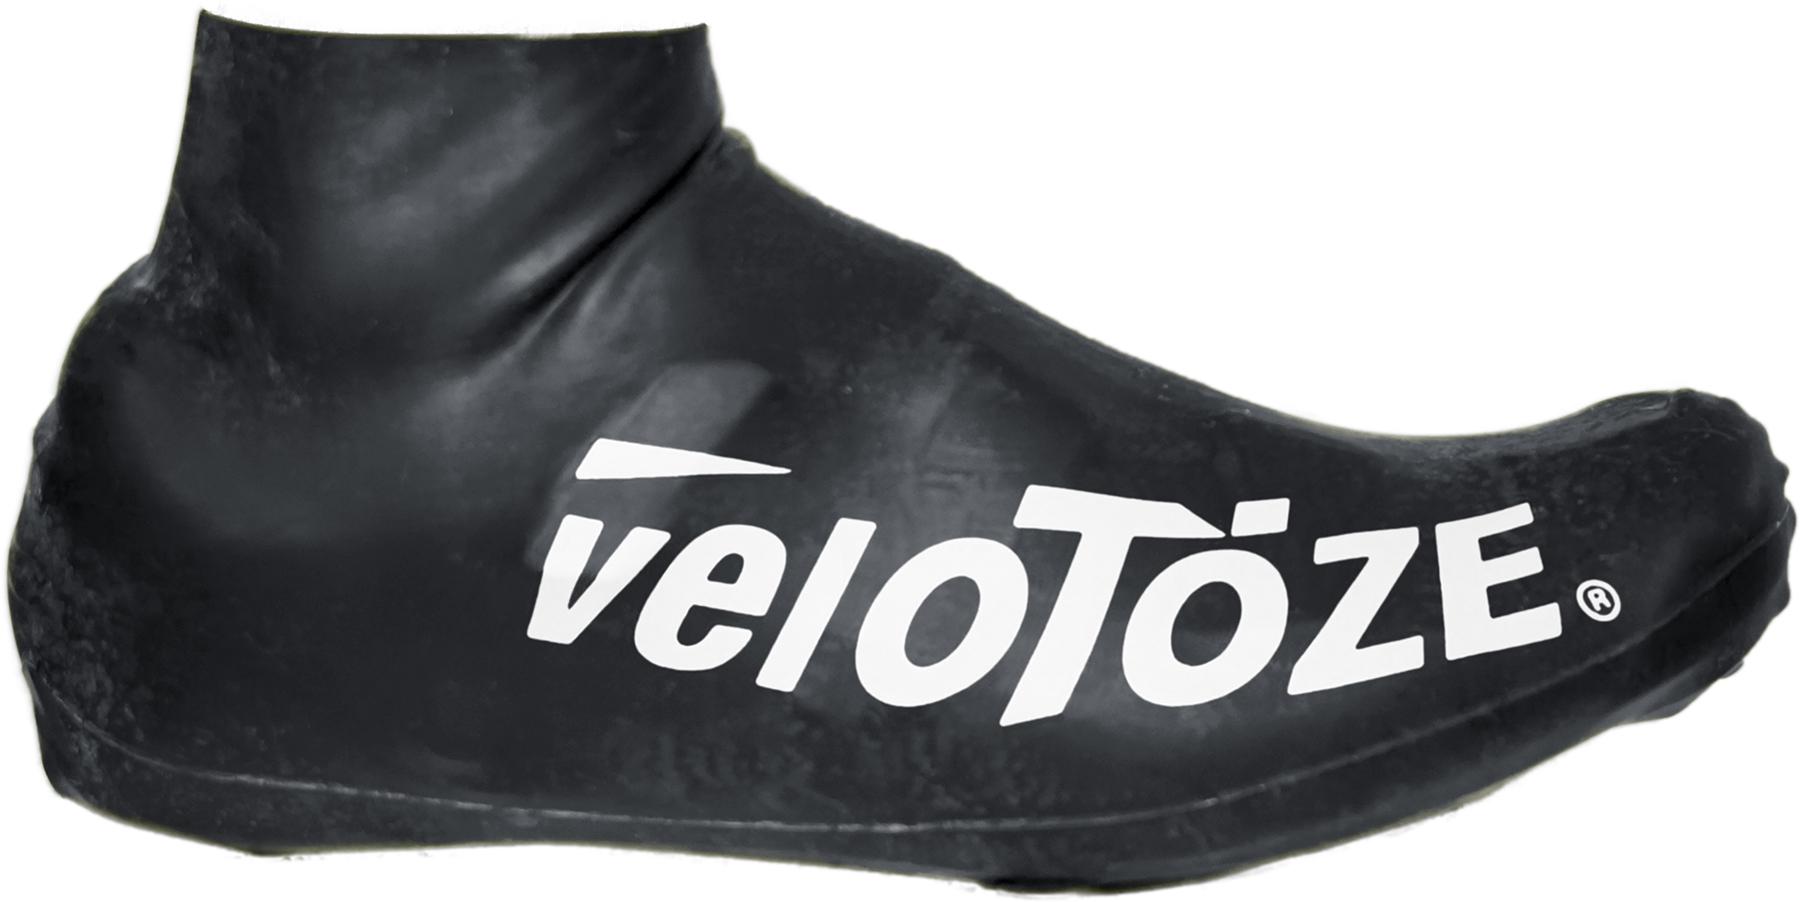 Velotoze Short Overshoes 2.0 - Black